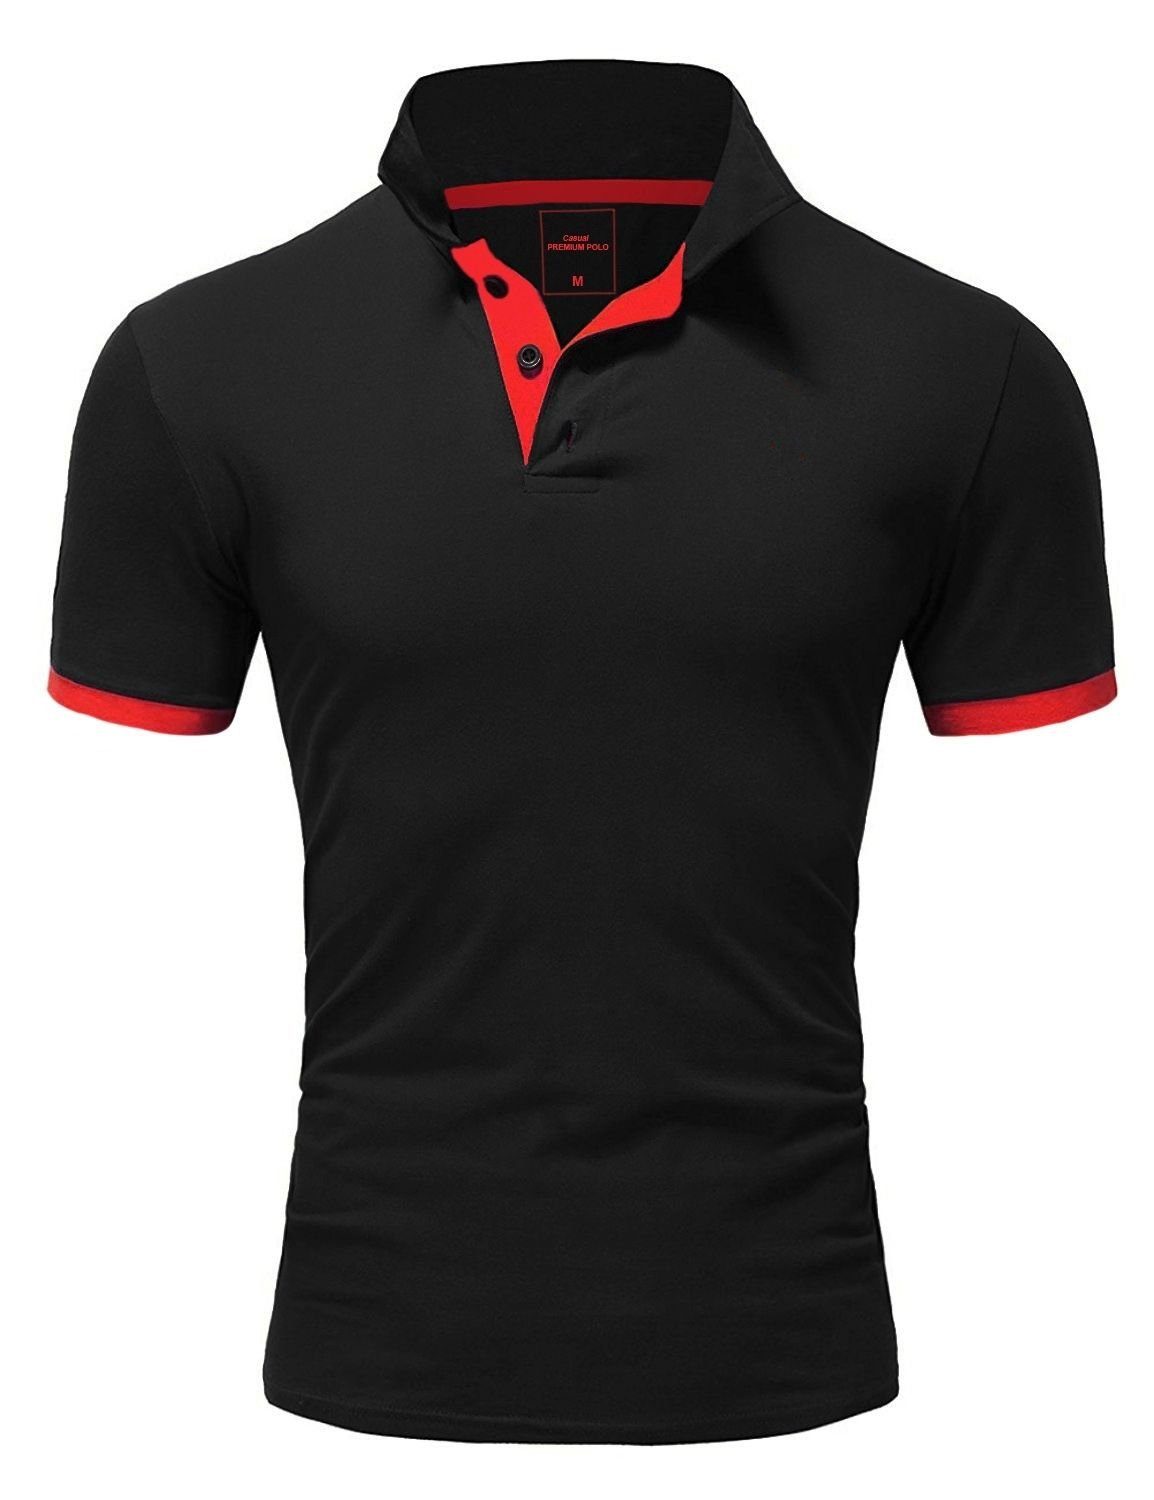 behype Poloshirt BASE mit kontrastfarbigen Details schwarz-rot